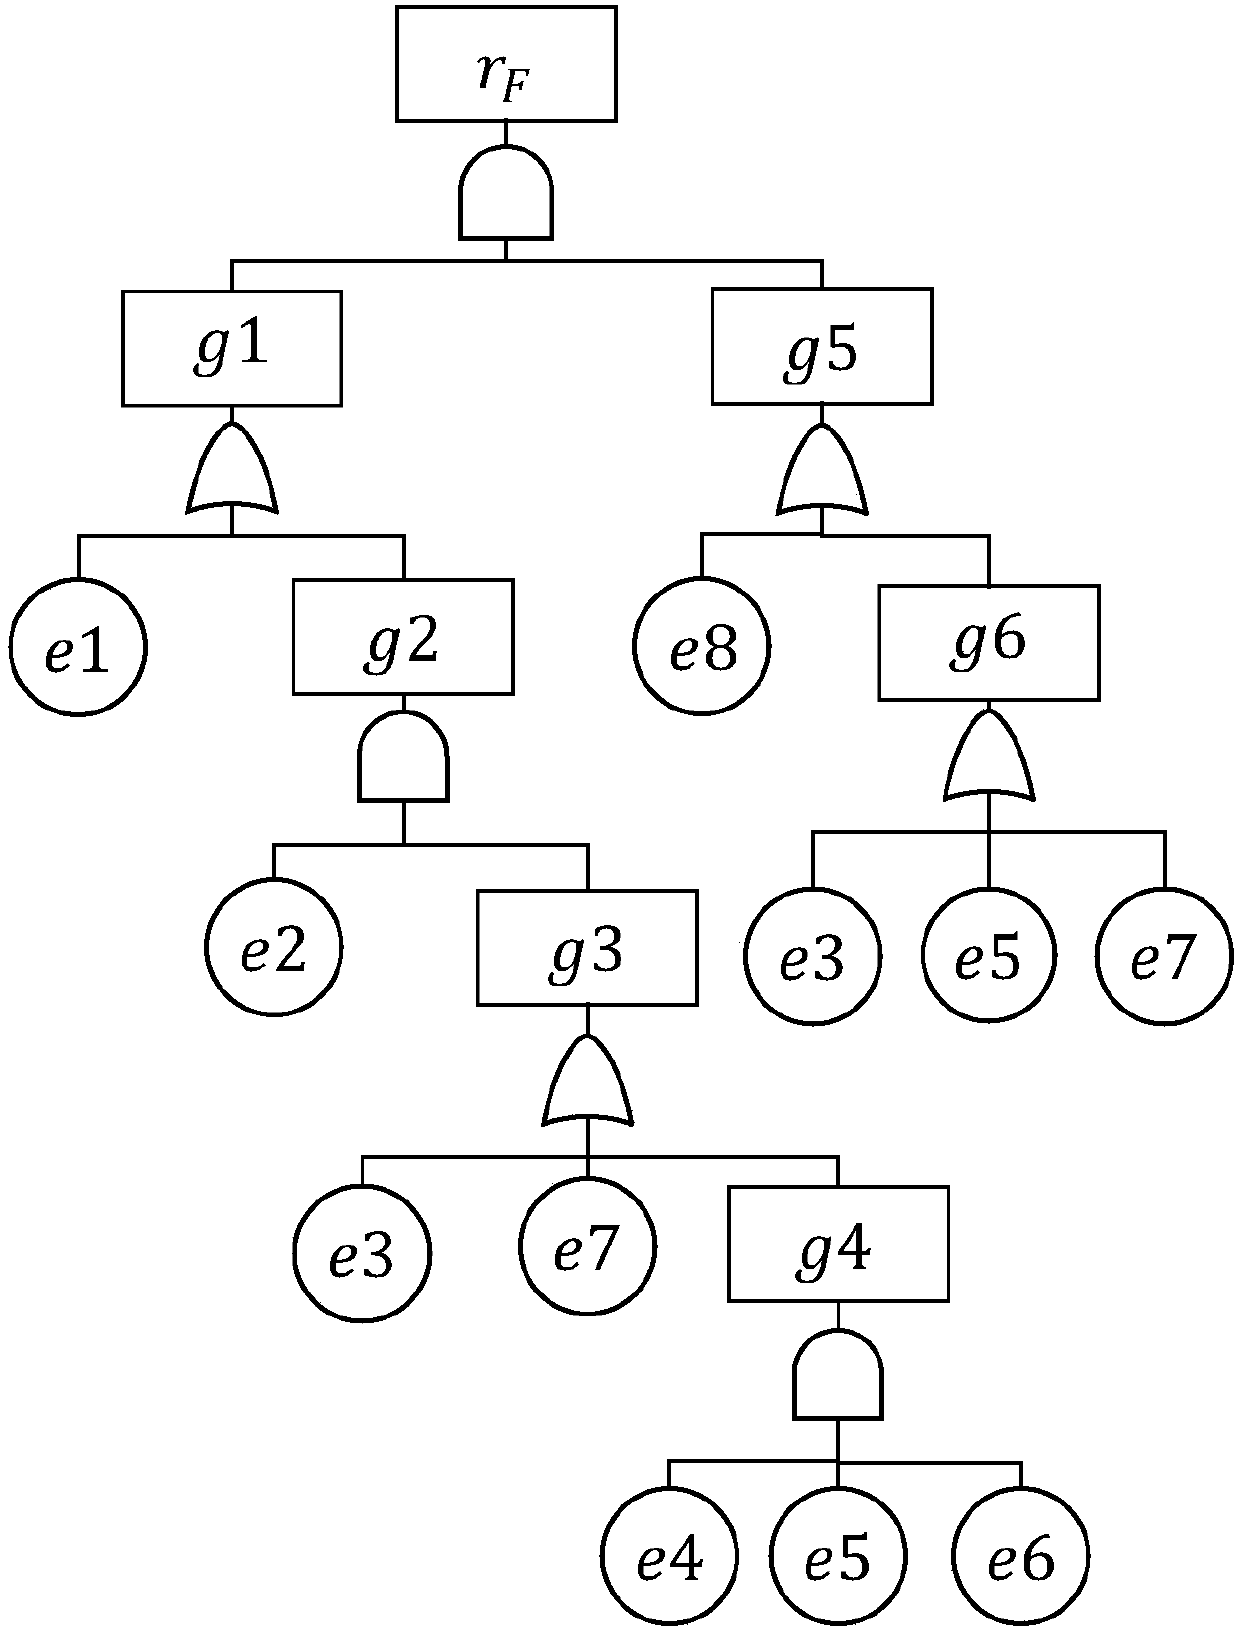 Fault tree minimal cut set solving method based on jump-chronological backtrack